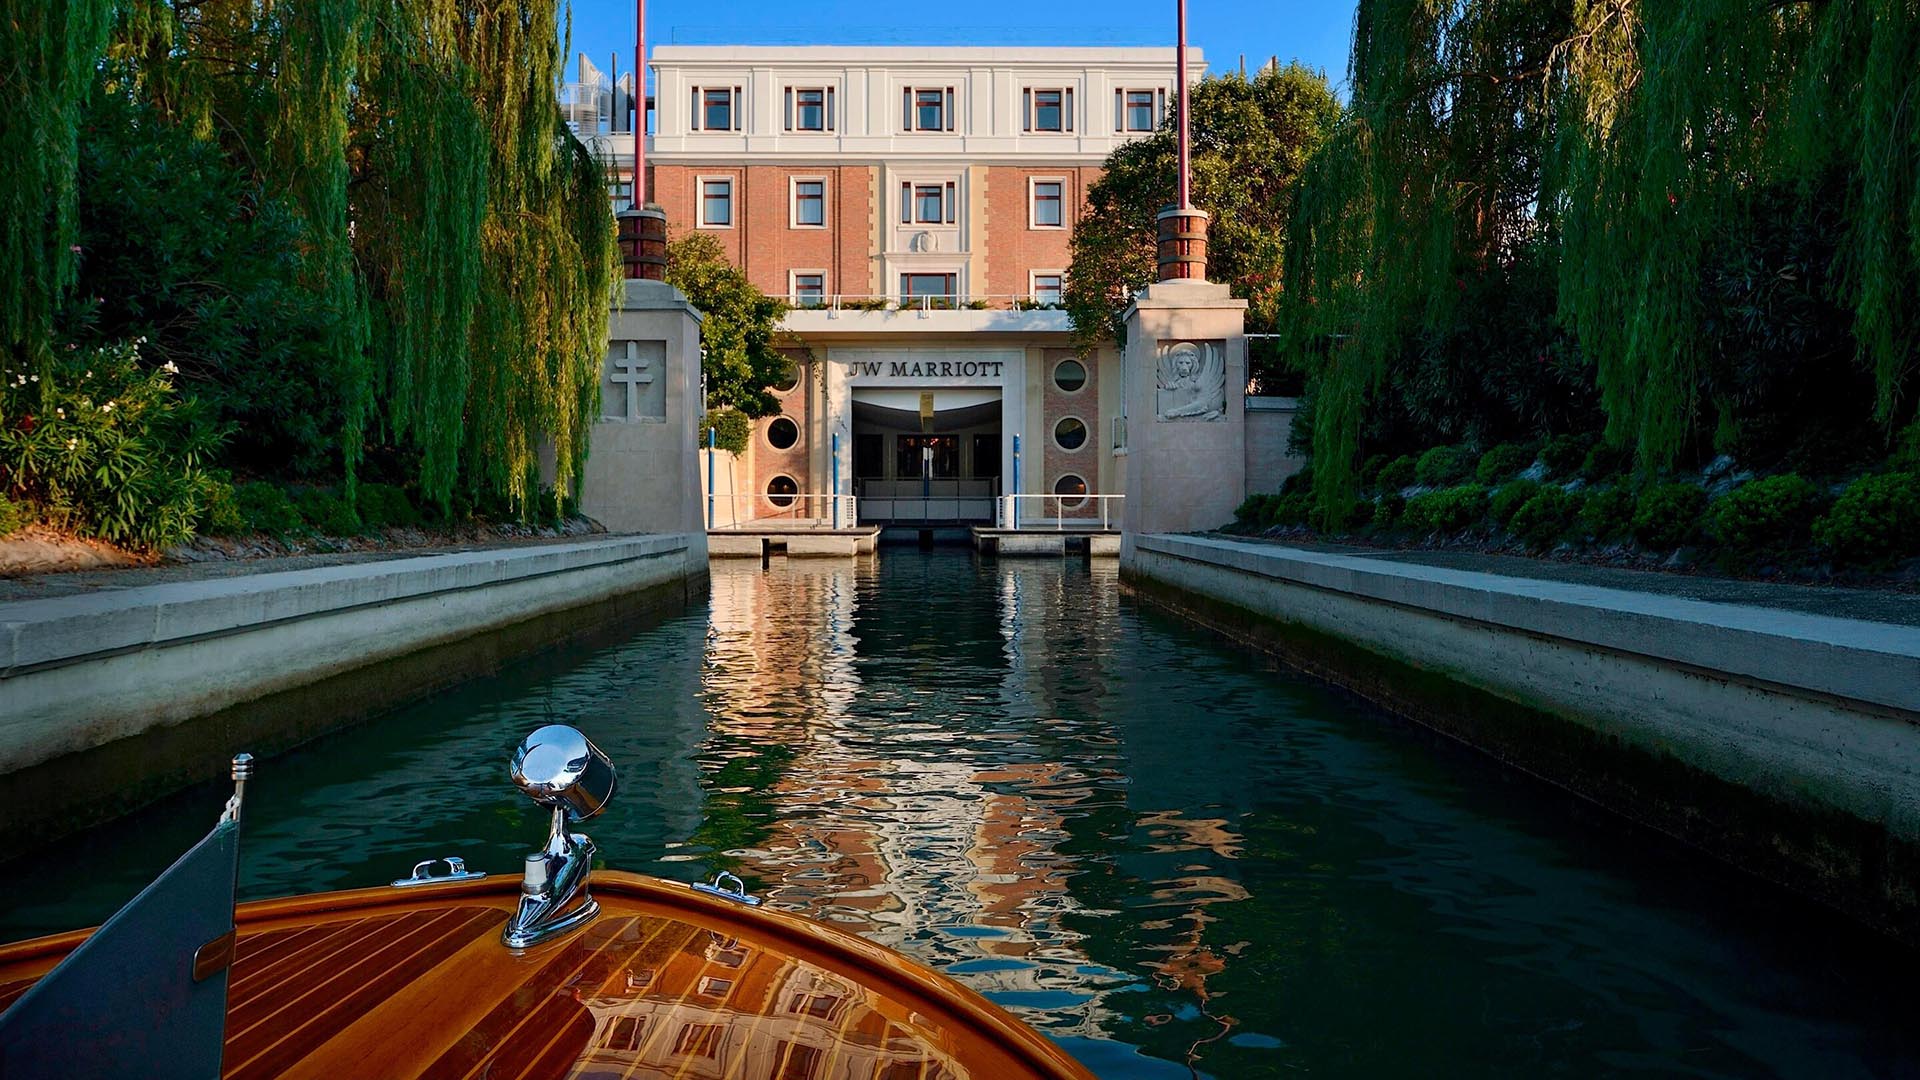 Solace Found: The JW Marriott Venice Is a Destination Within a Destination (Venice)